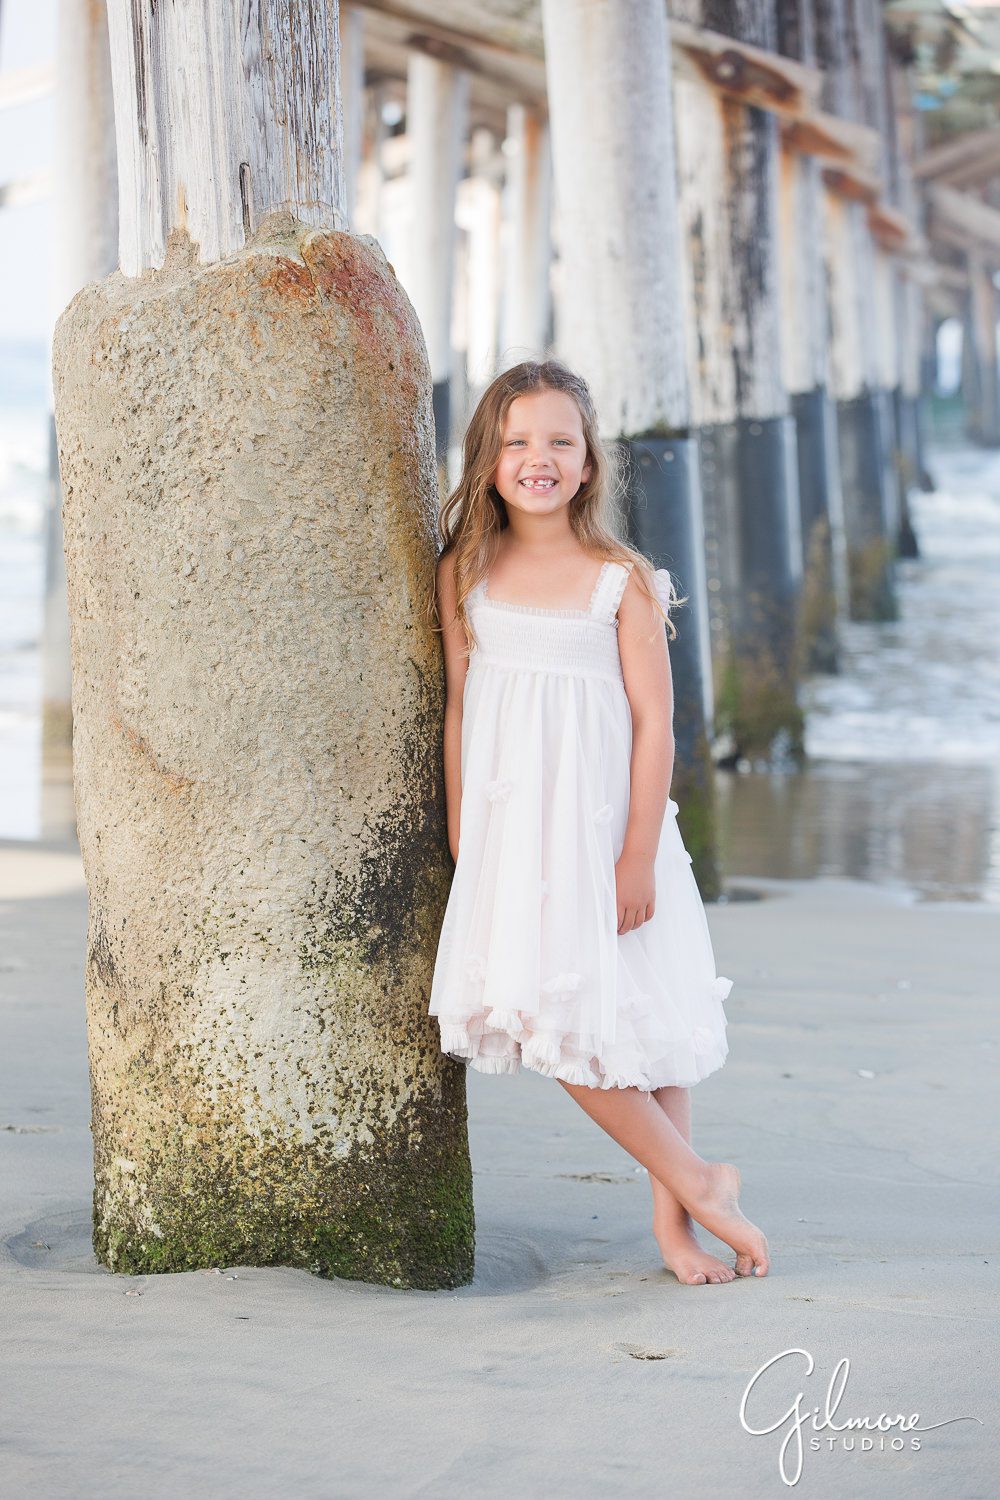 Family Photography Session - Newport Beach Pier, children's portrait photographer, orange county